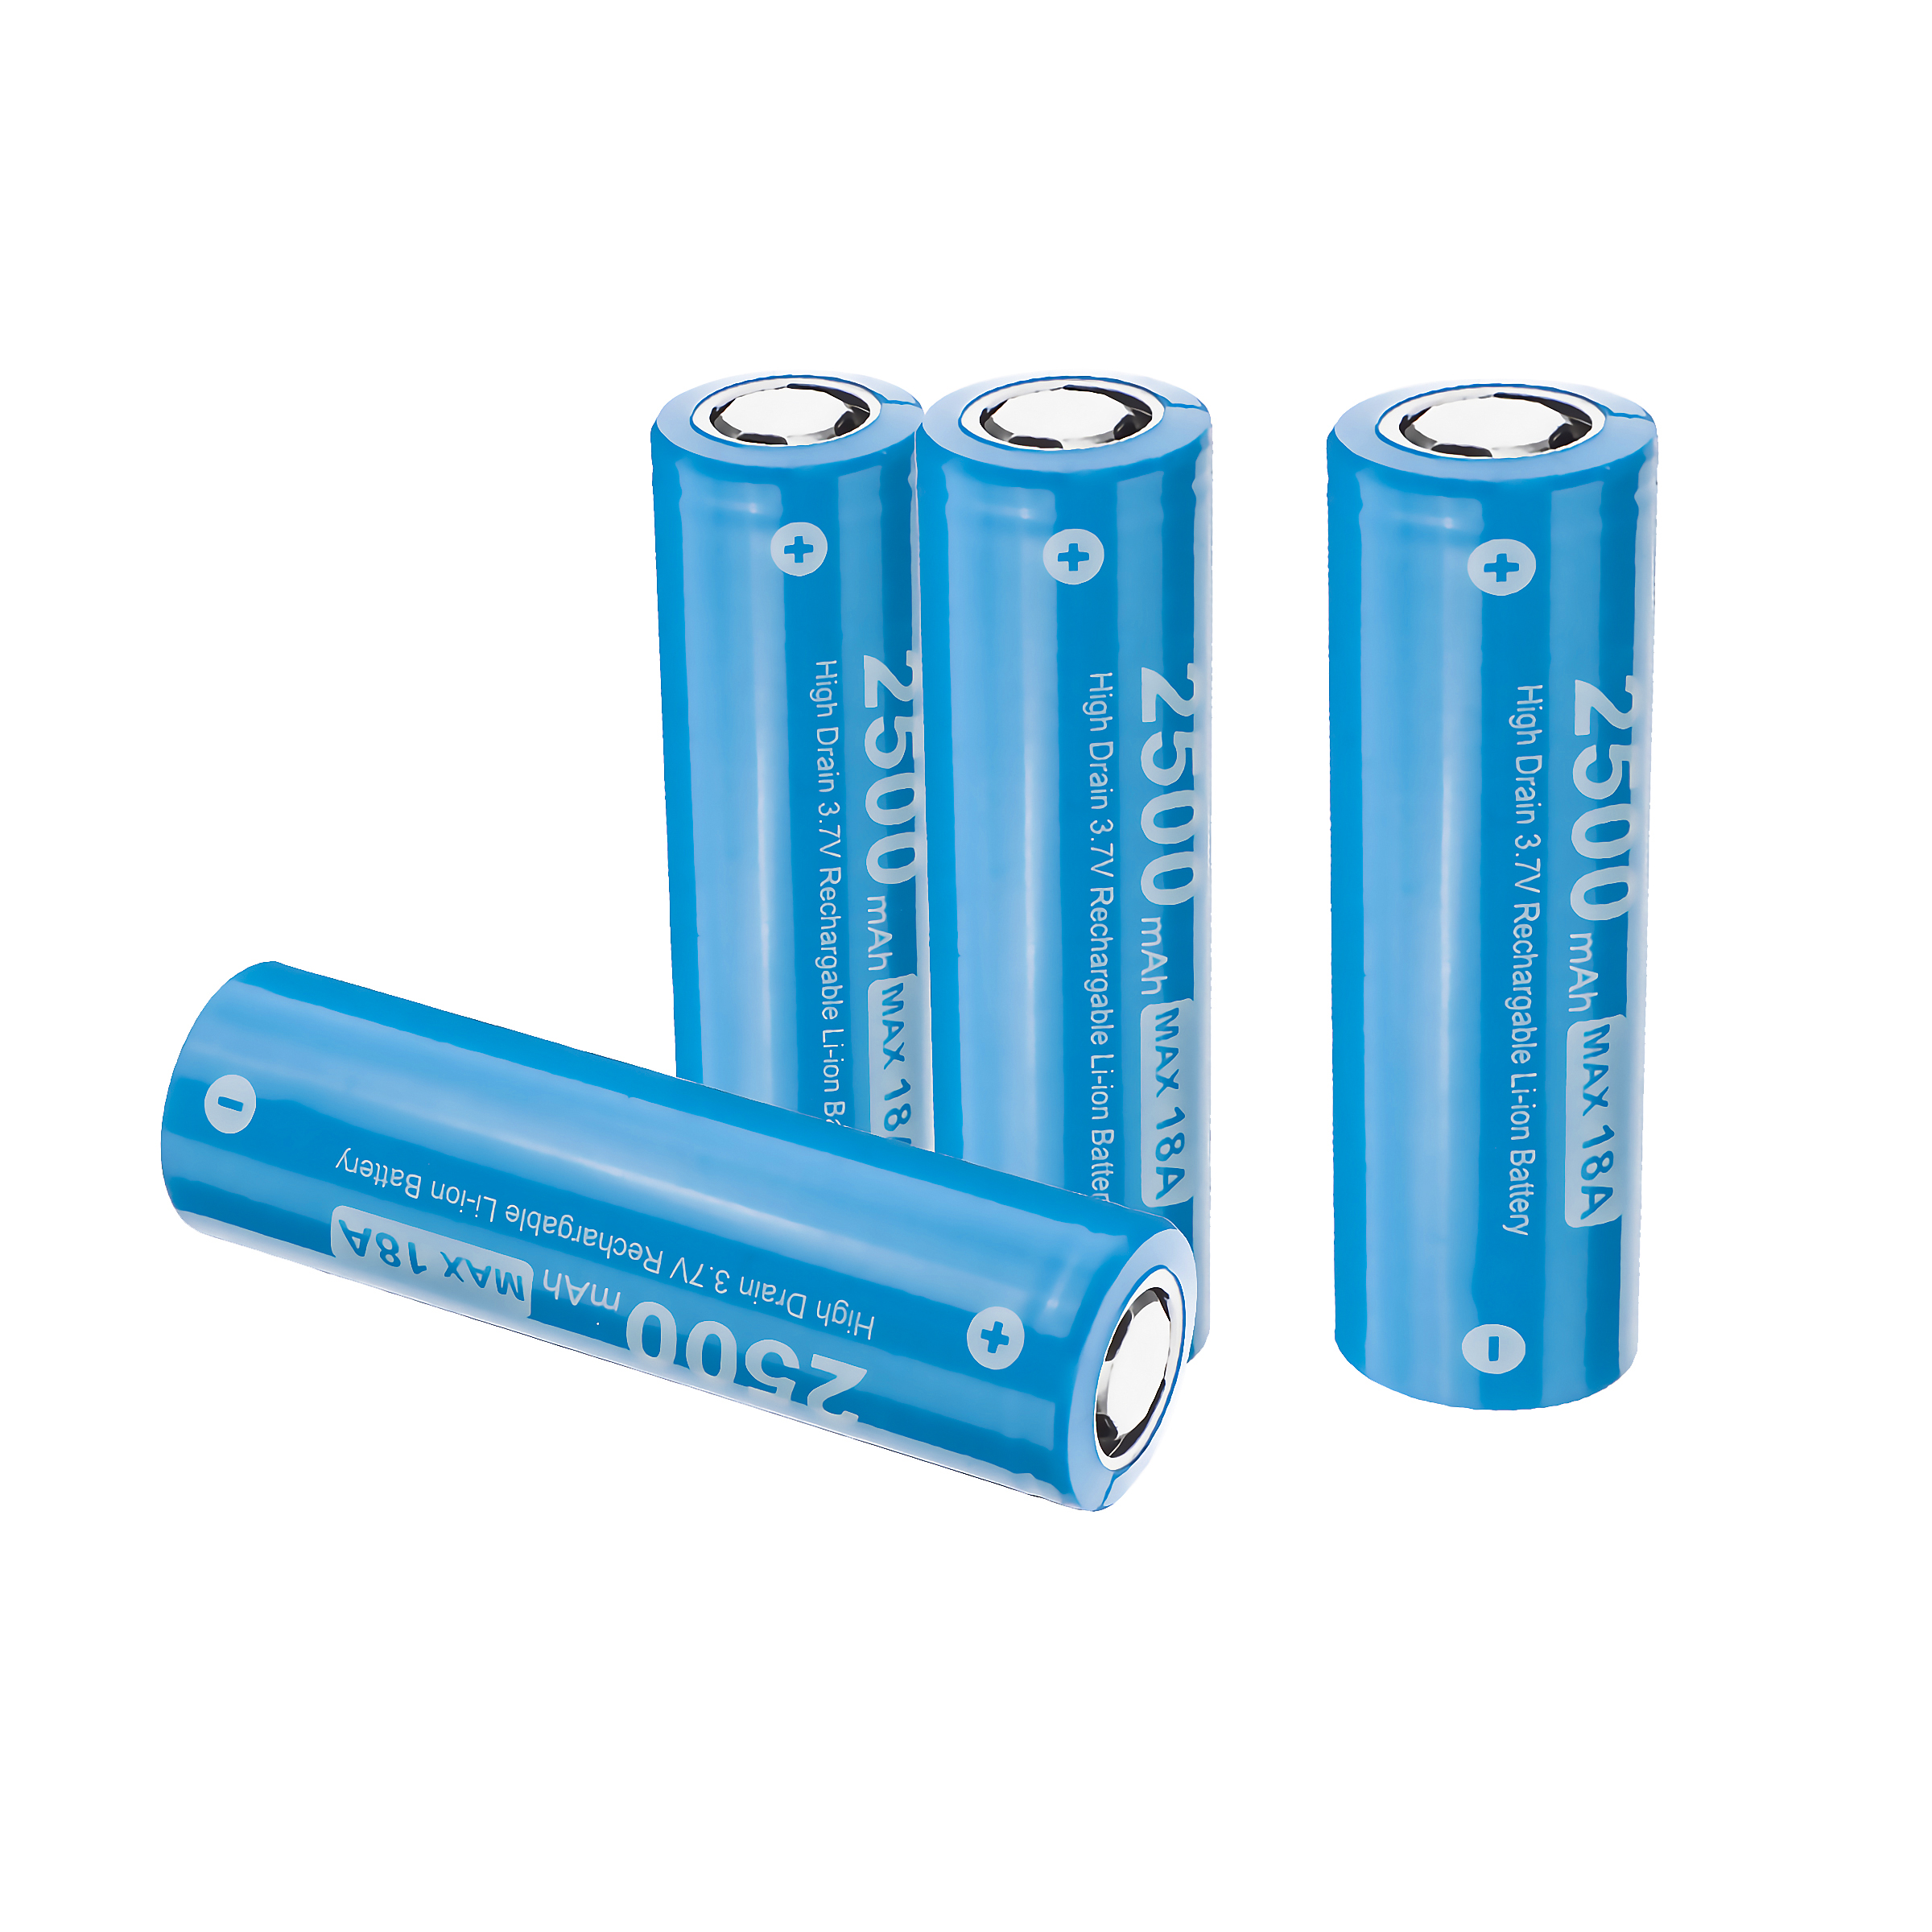 1Pcs Astrolux E1825 2500mAh 18A 3.7V 18650 Li-ion Battery Unprotected High Drain Rechargeable Lithium Power Cell For Jetbeam Nitecore Lumintop Fenix Olight Flashlights FPV RC Toys E-bikes